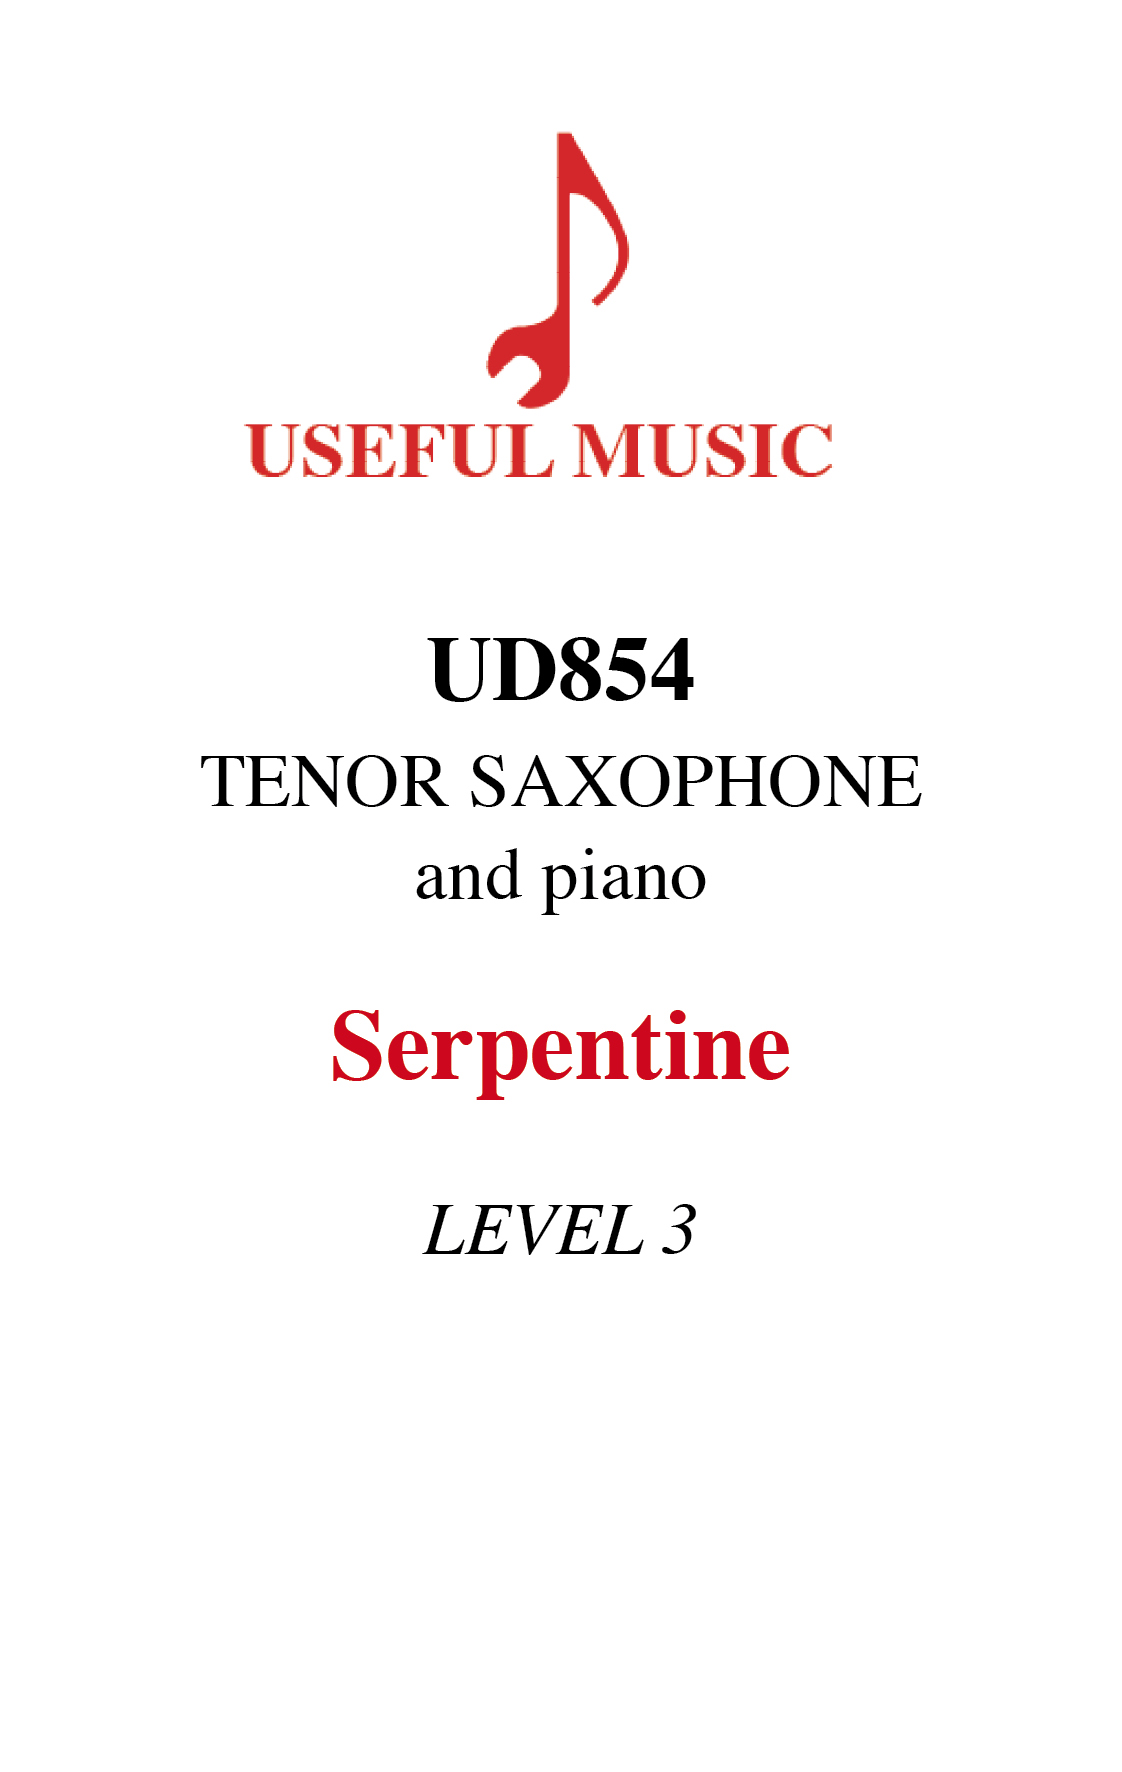 Serpentine - tenor saxophone with piano accompaniment